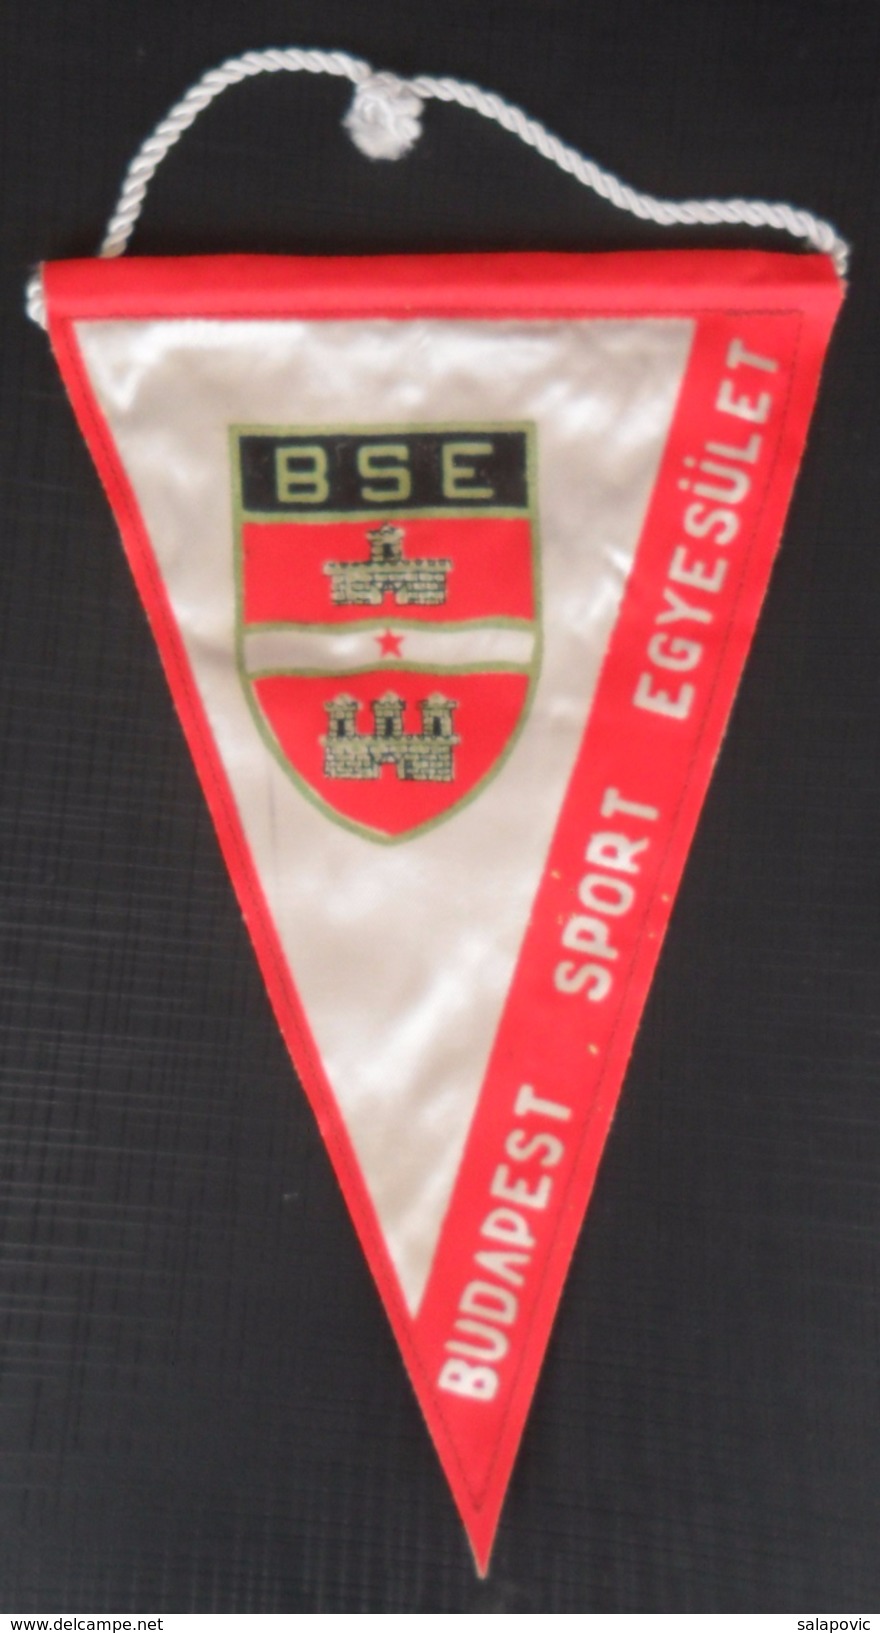 Budapest Sport Egyesület BSE Hungary FOOTBALL CLUB, SOCCER / FUTBOL / CALCIO, OLD PENNANT, SPORTS FLAG - Apparel, Souvenirs & Other